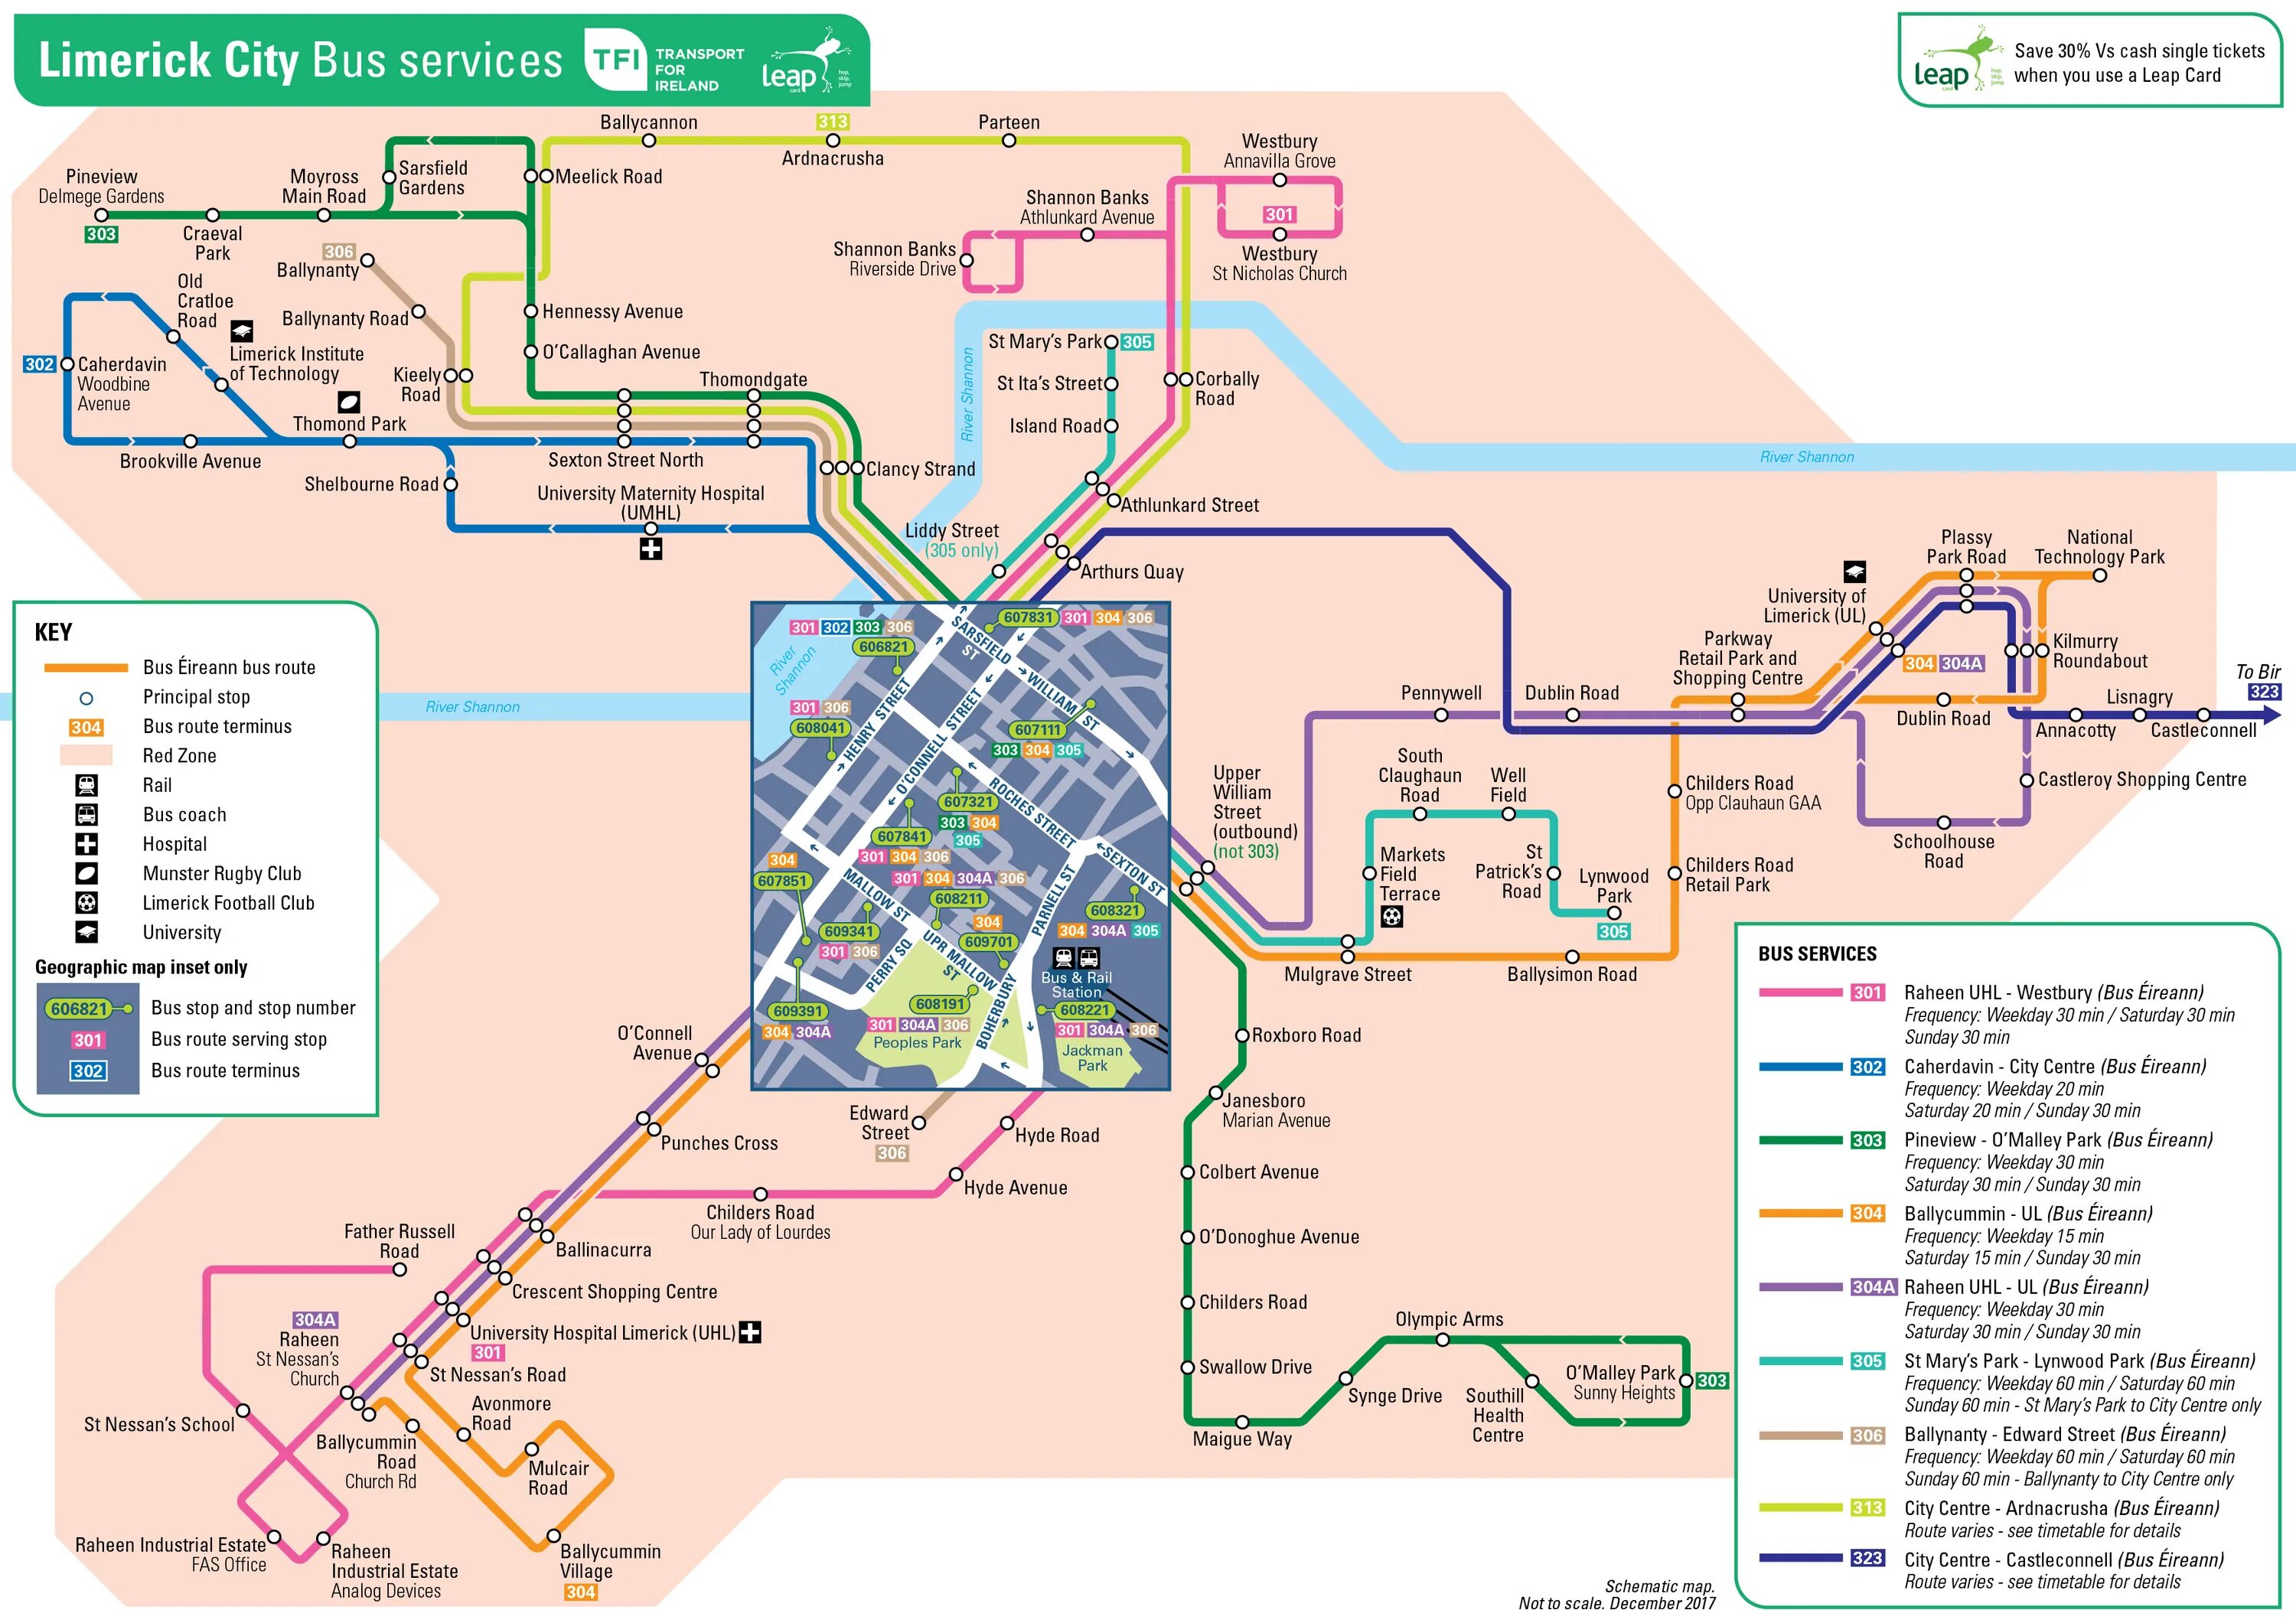 397 автобус карты. The Bus карта. Transport Dublin Map. Dublin Bus Universal accessibility. Zones of Dublin transport.